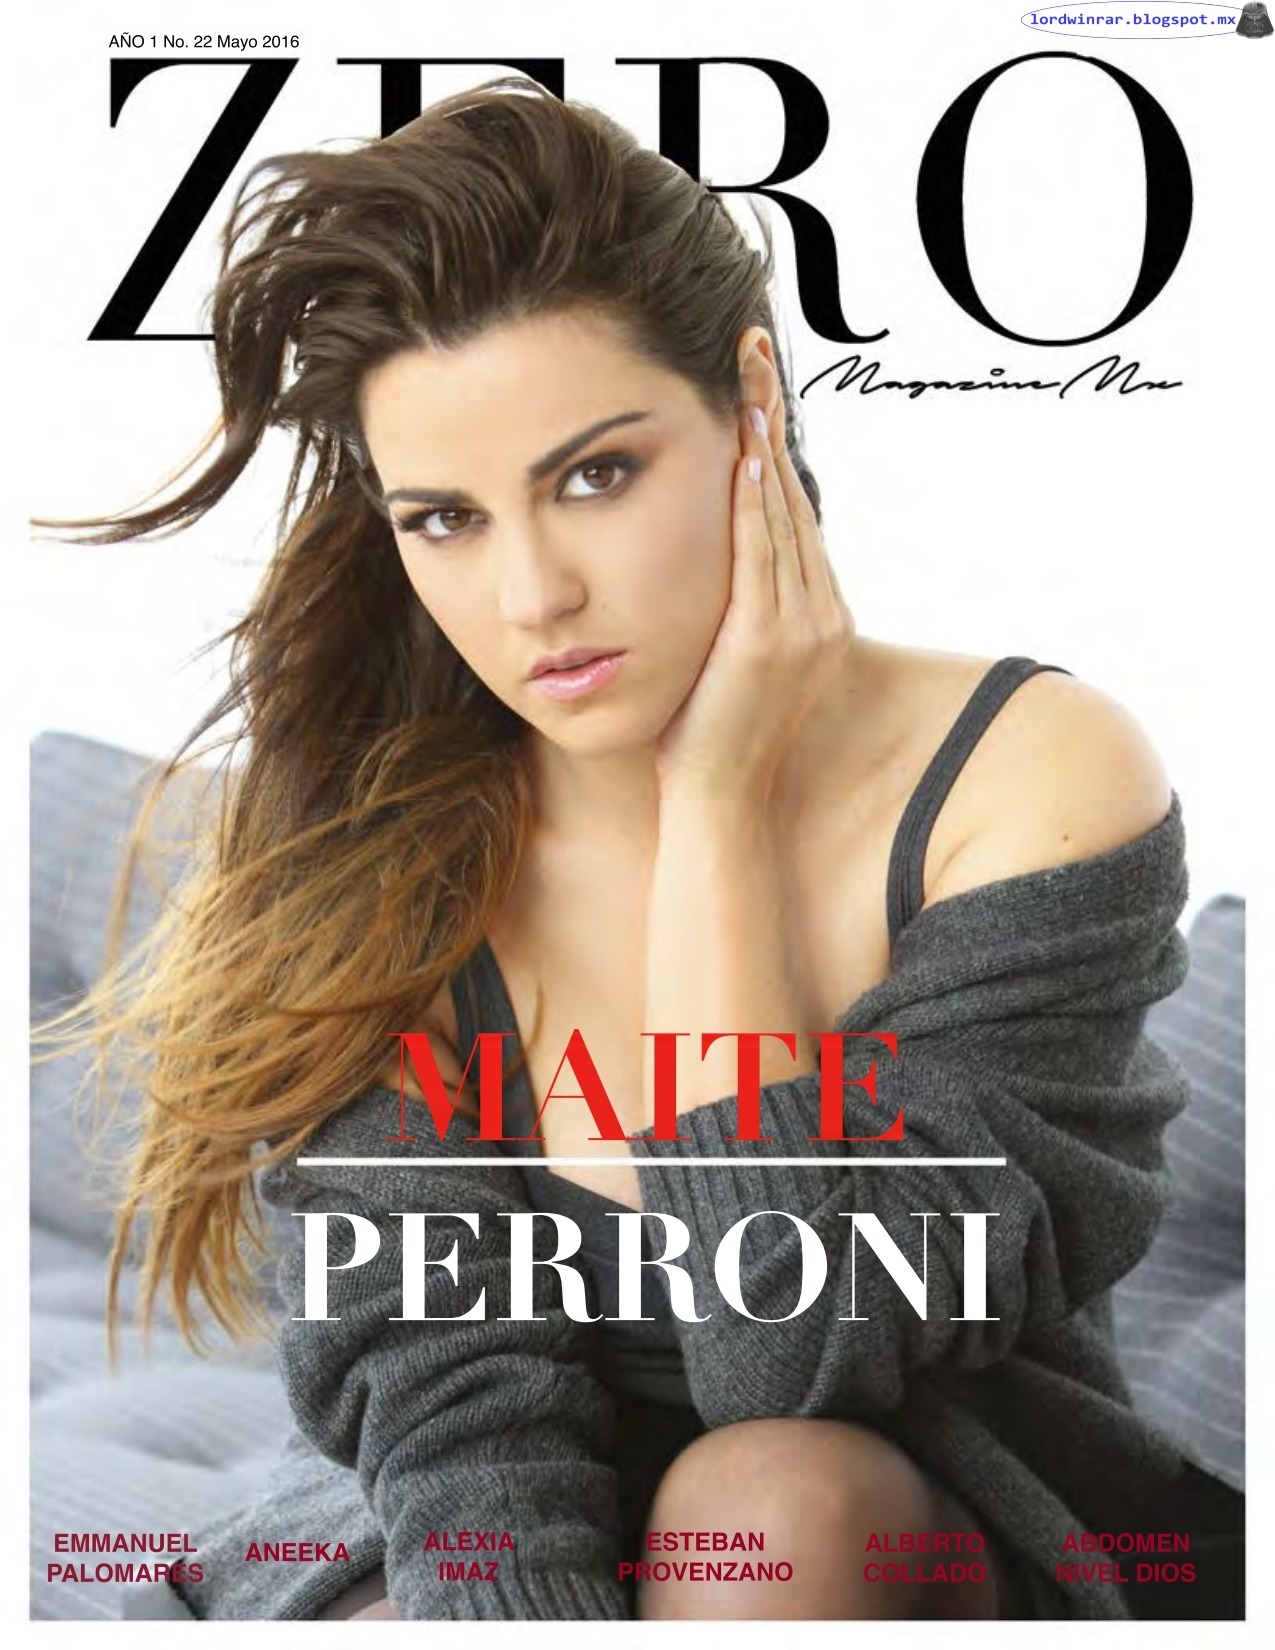   Maite Perroni - Zero Magazine Mx 2016 Mayo (23 Fotos HQ)Maite Perroni en la revista